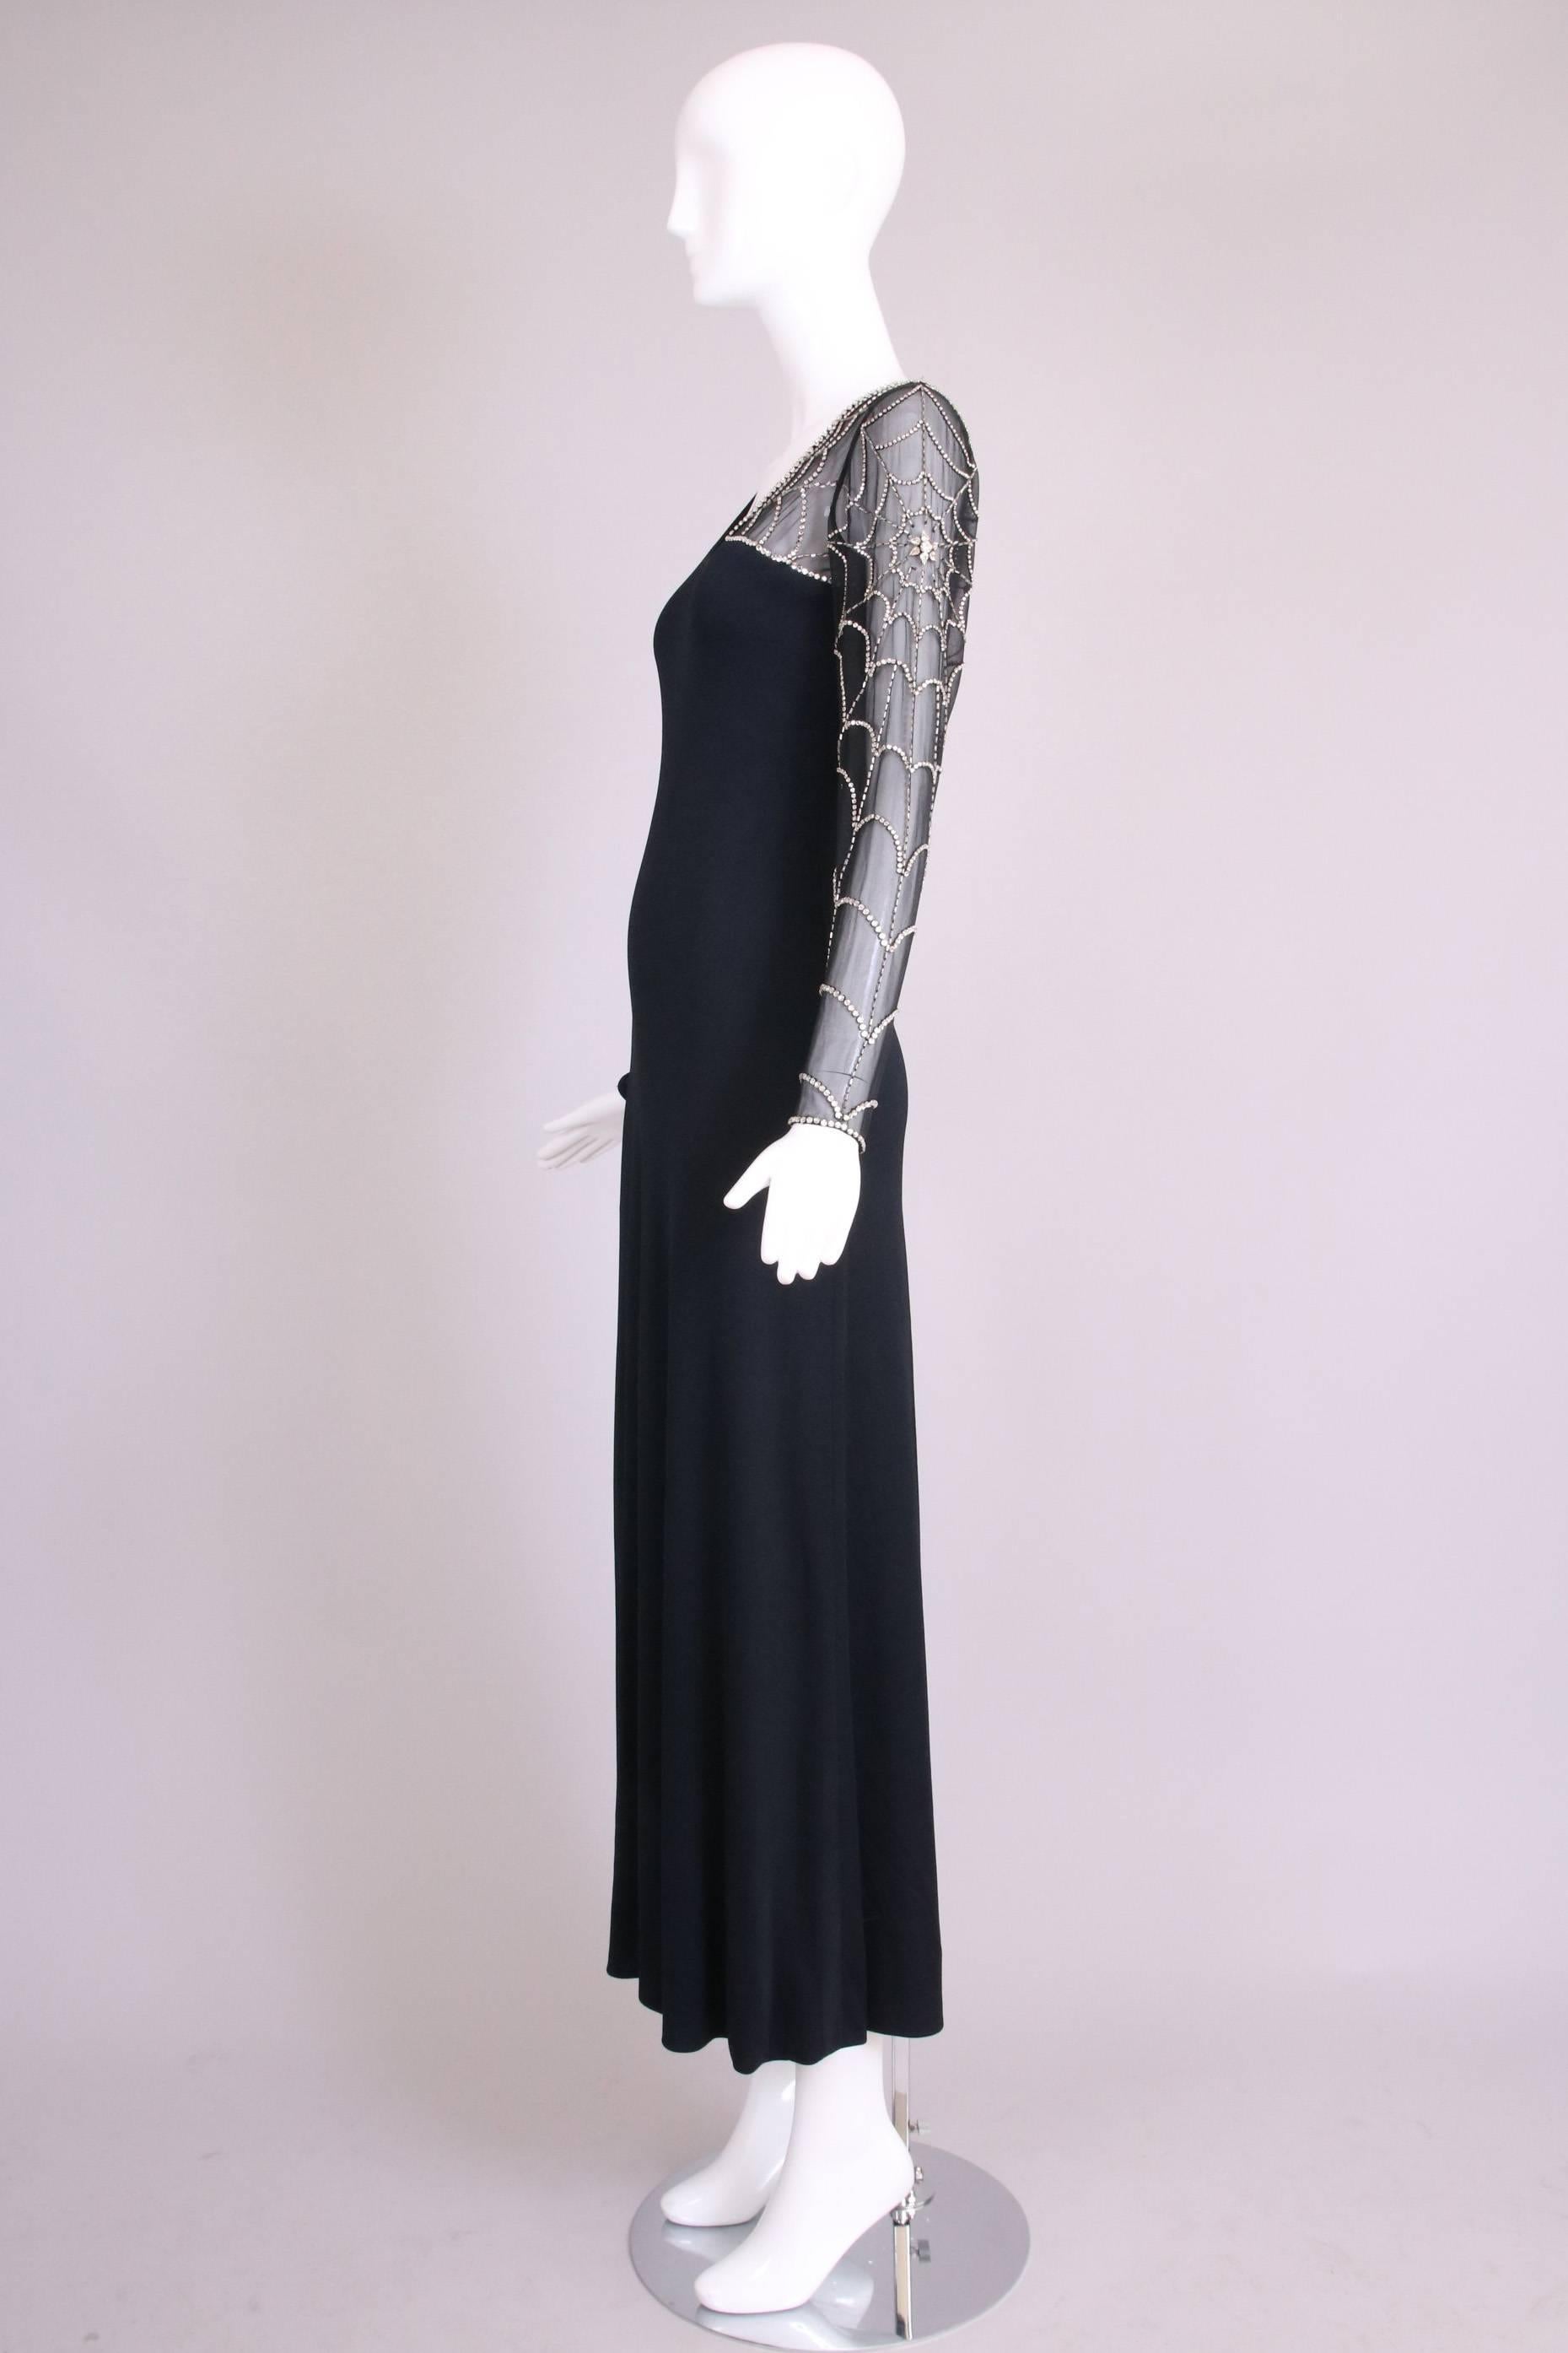 Mollie Parnis Black Silk Jersey Evening Dress Gown w/Beaded Spiderweb Sleeves 1